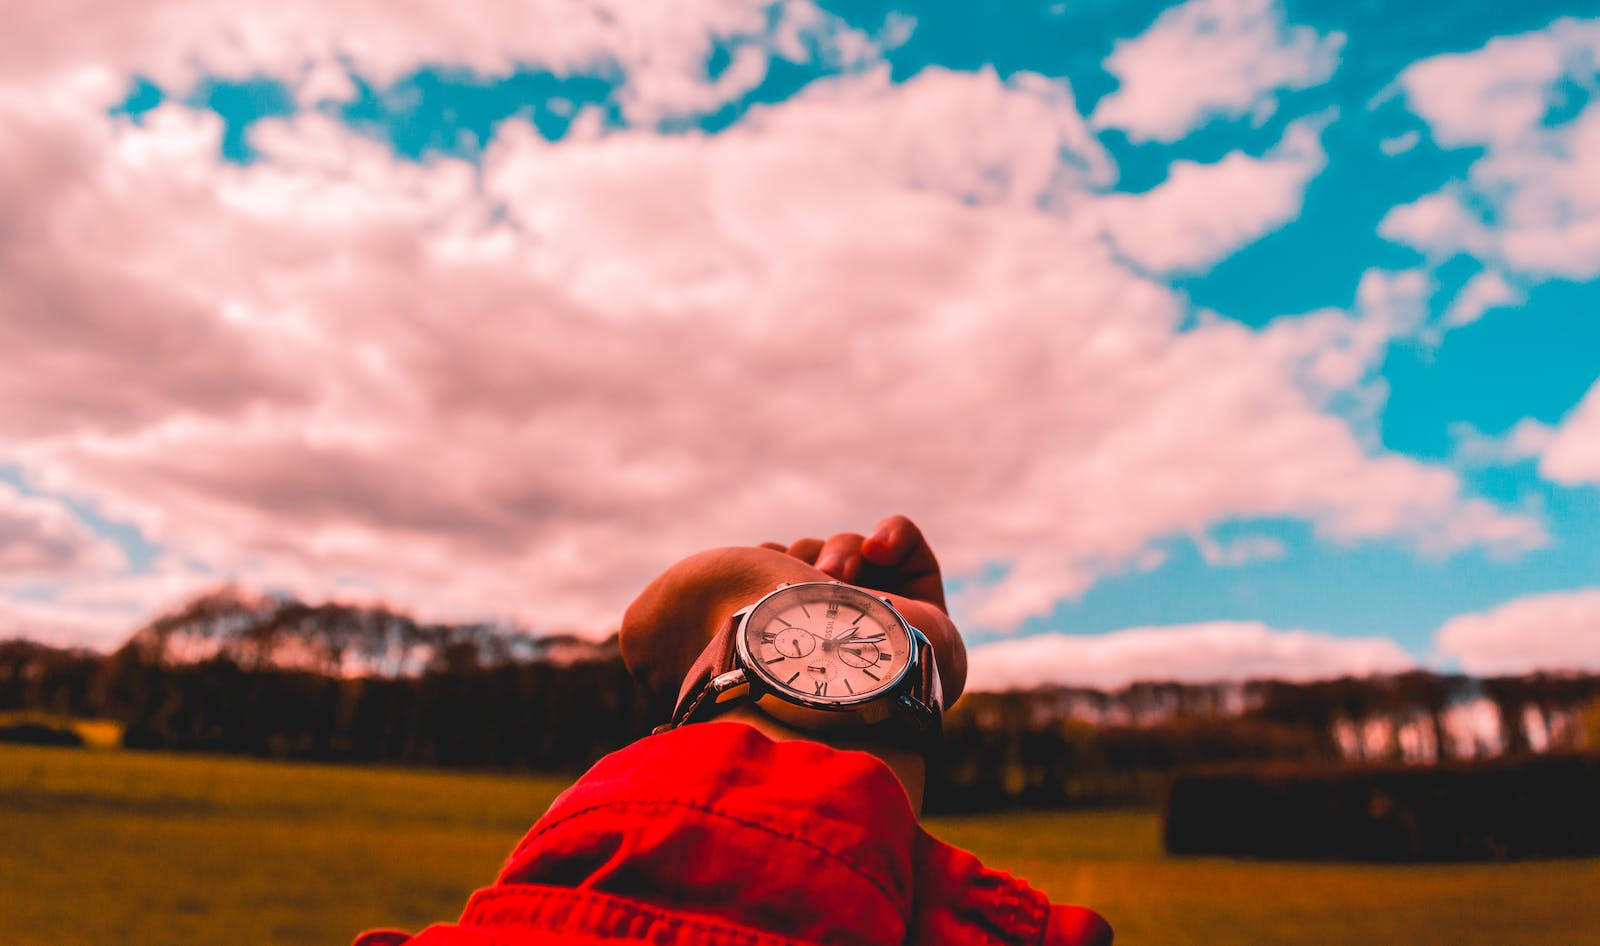 Time Wrist Watch And Sky